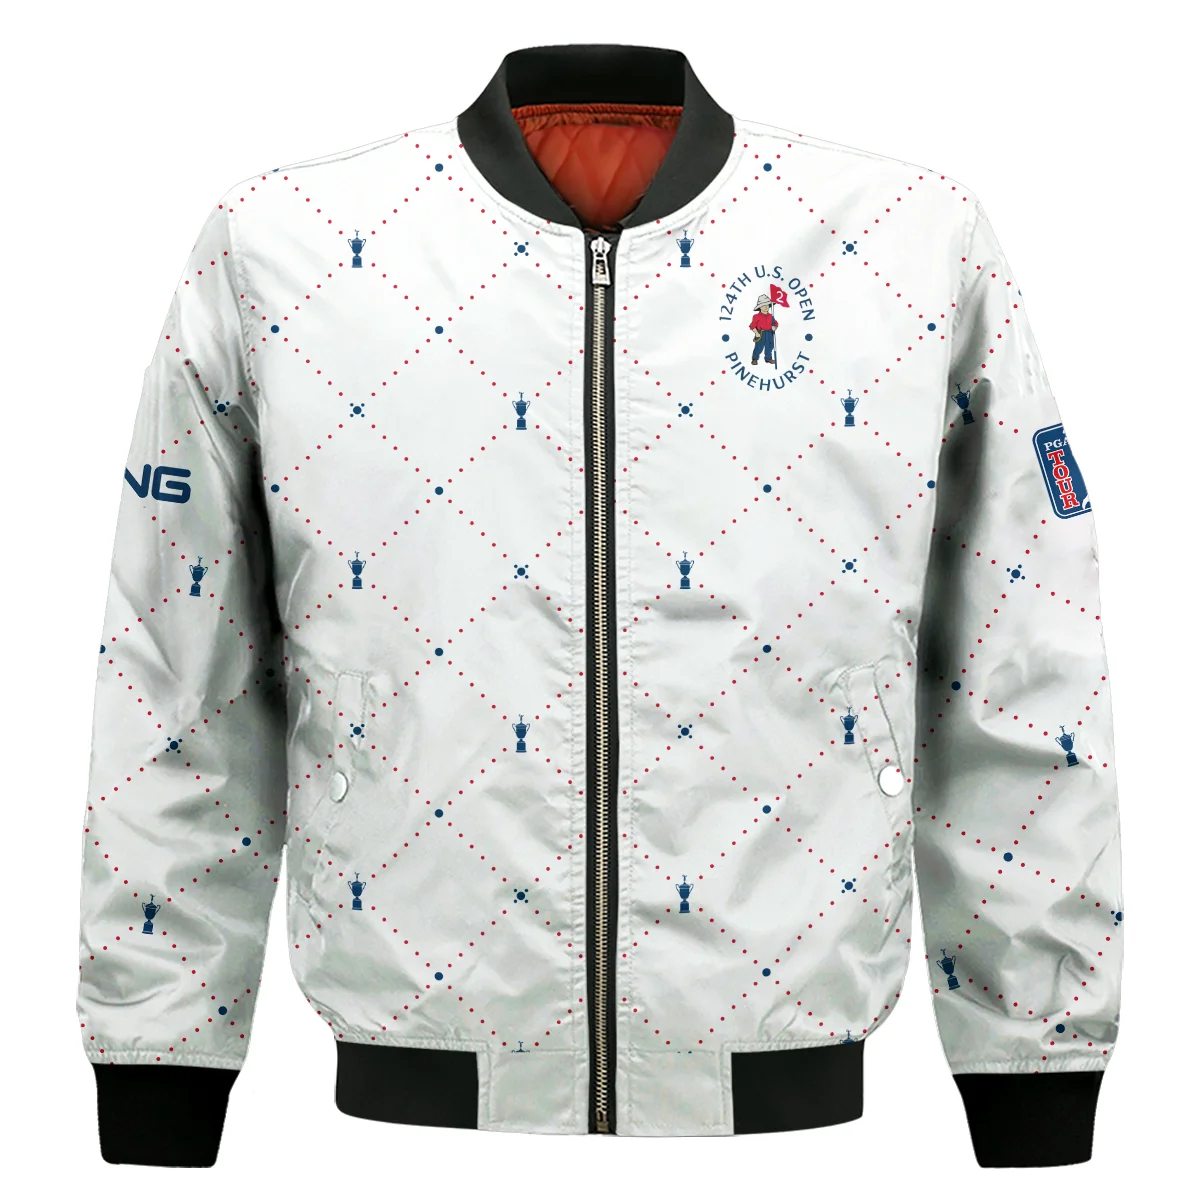 Argyle Pattern With Cup 124th U.S. Open Pinehurst Ping Quarter-Zip Jacket Style Classic Quarter-Zip Jacket